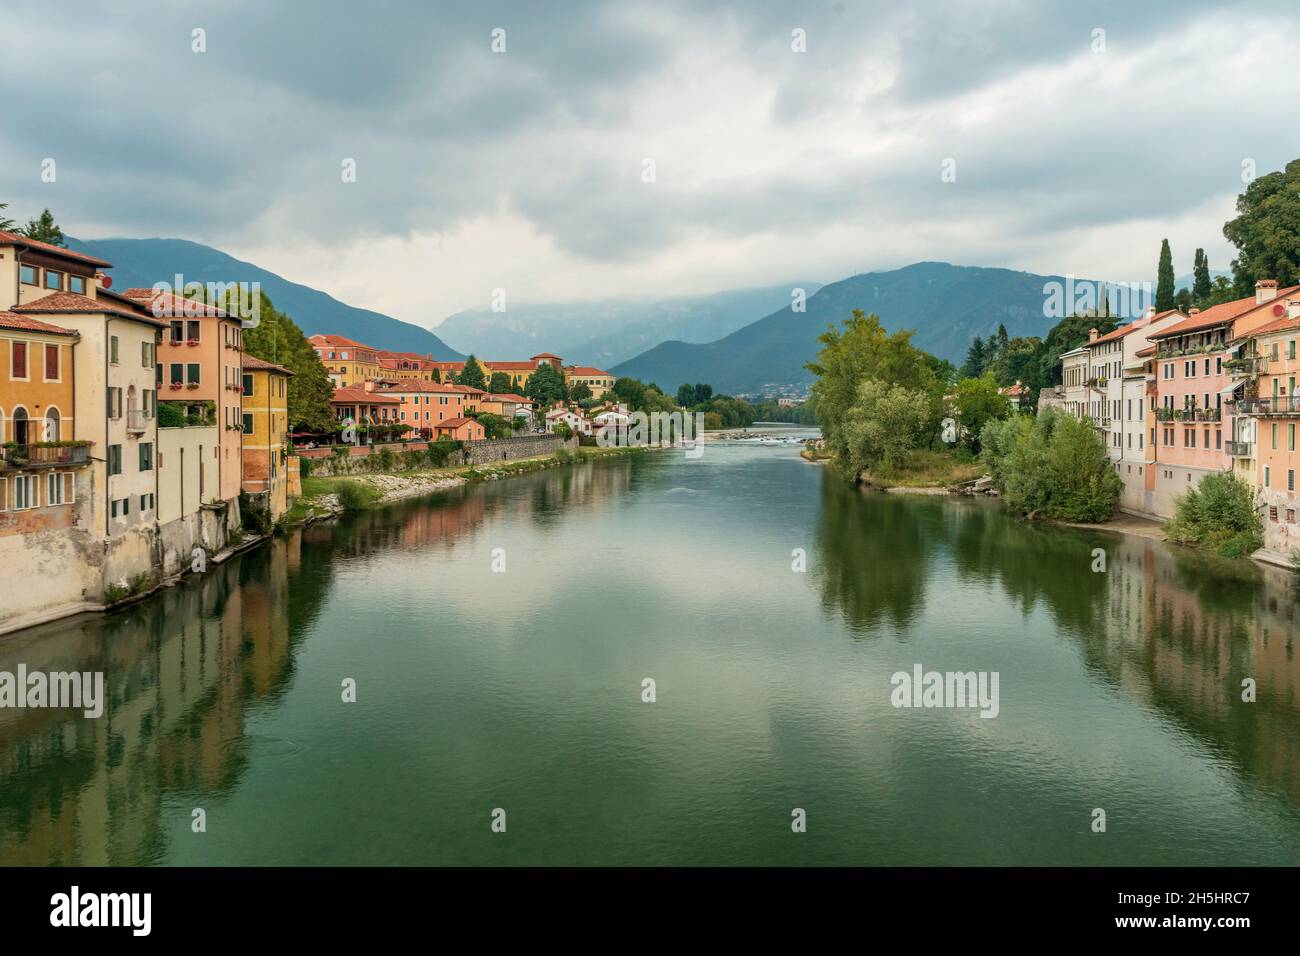 River Brenta seen from the Alpini's Bridge, or 'Old bridge', in Bassano del Grappa, Veneto region, Italy Stock Photo